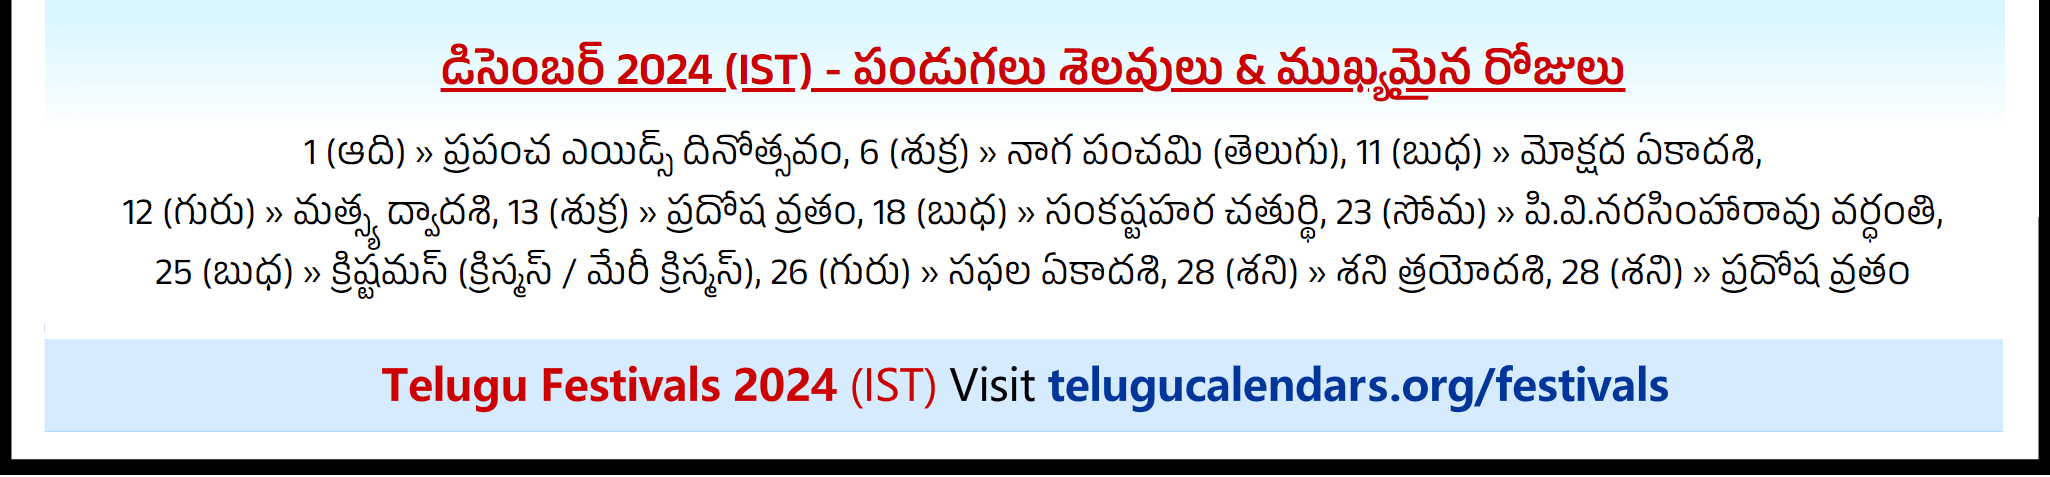 Telugu Festivals 2024 December Andhra Pradesh